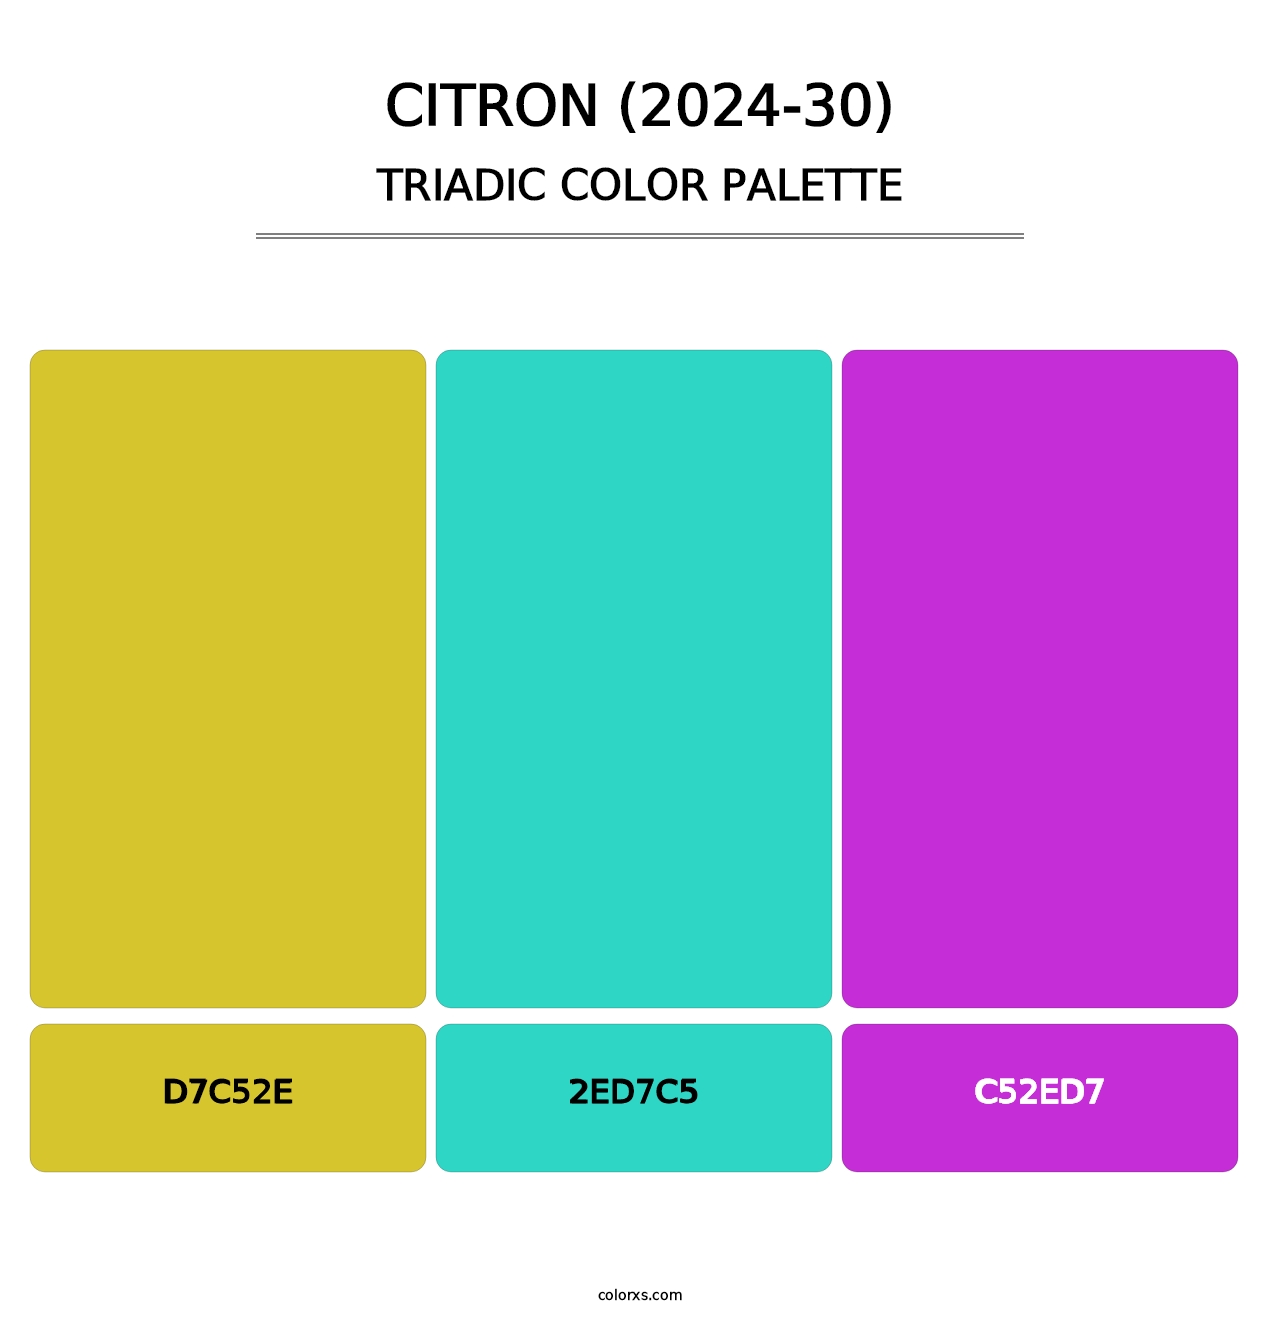 Citron (2024-30) - Triadic Color Palette